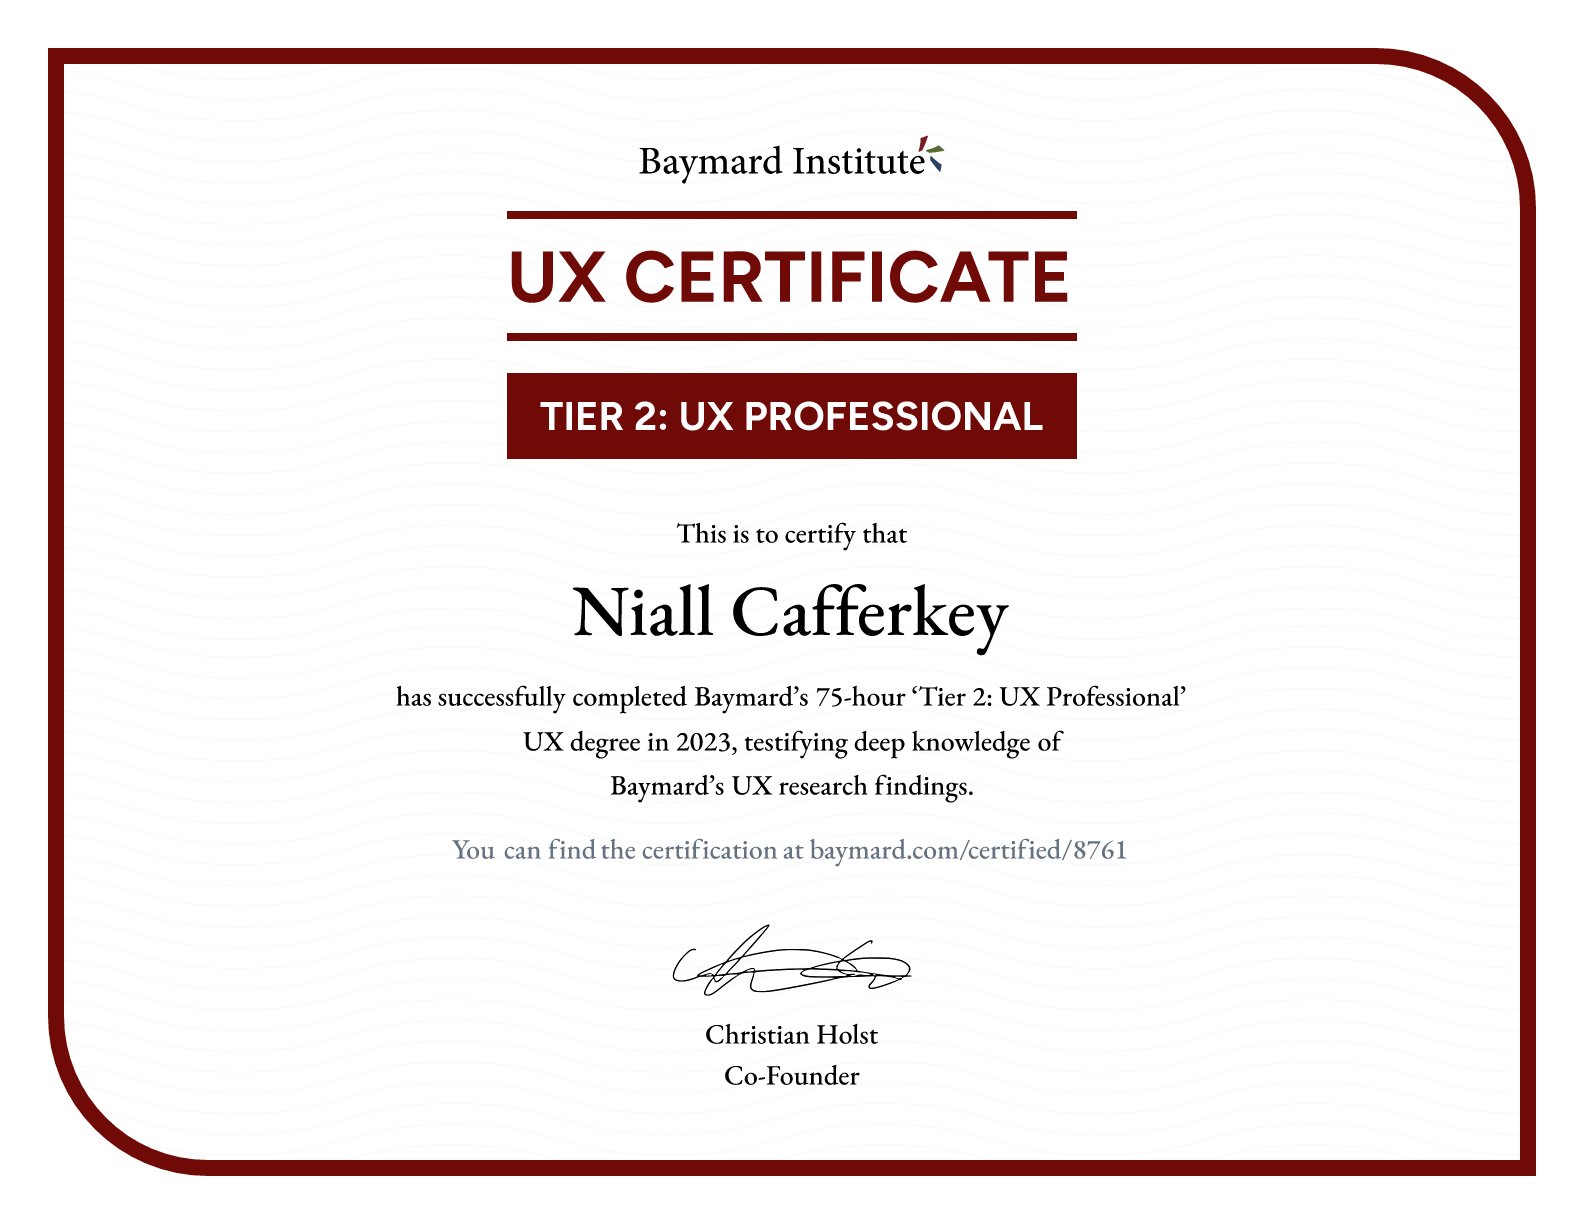 Niall Cafferkey’s certificate